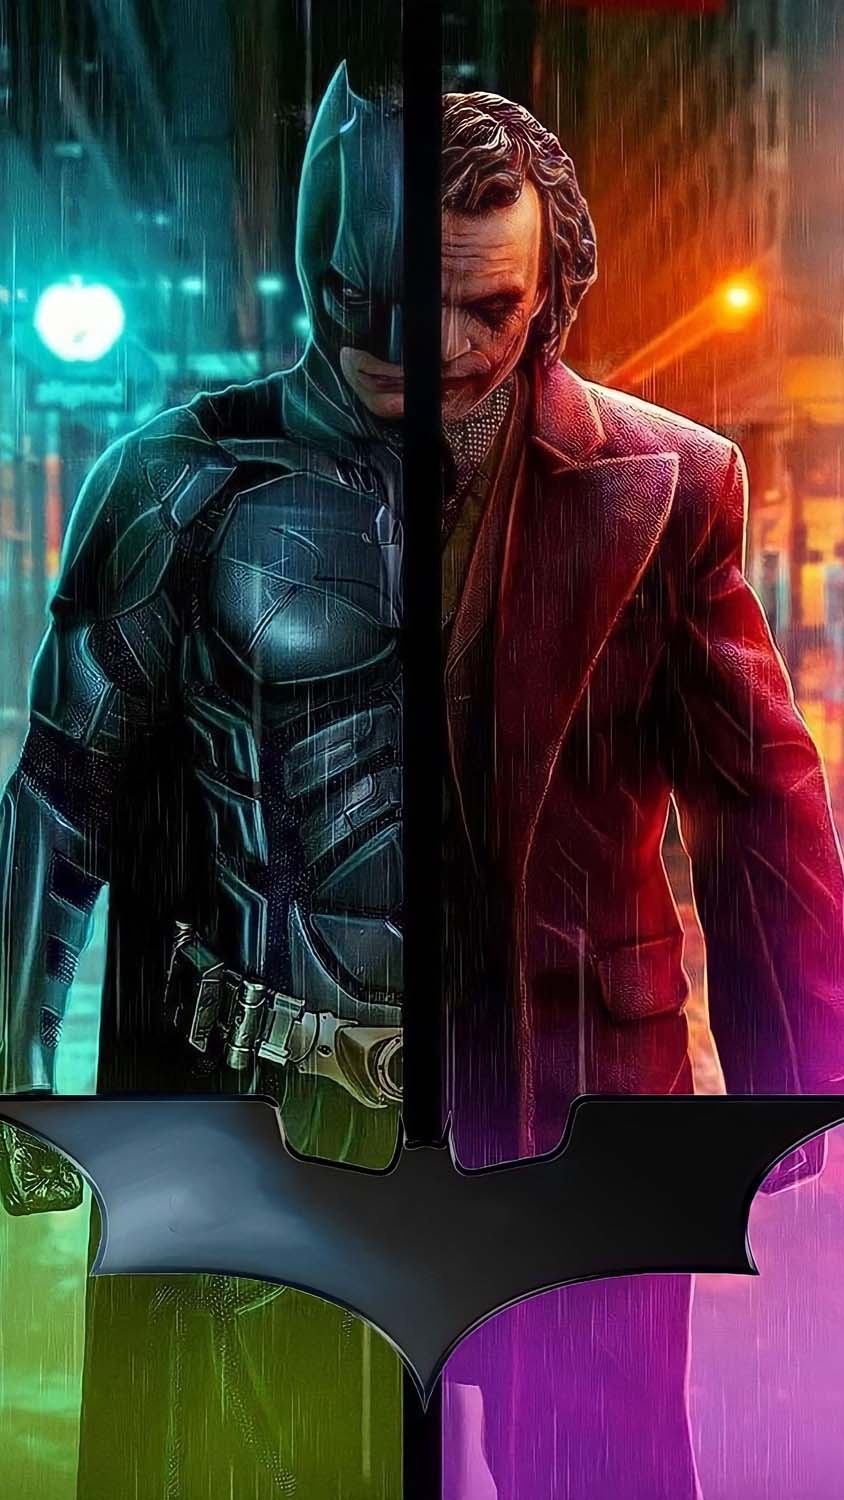 Batman vs joker iphone wallpaper hd